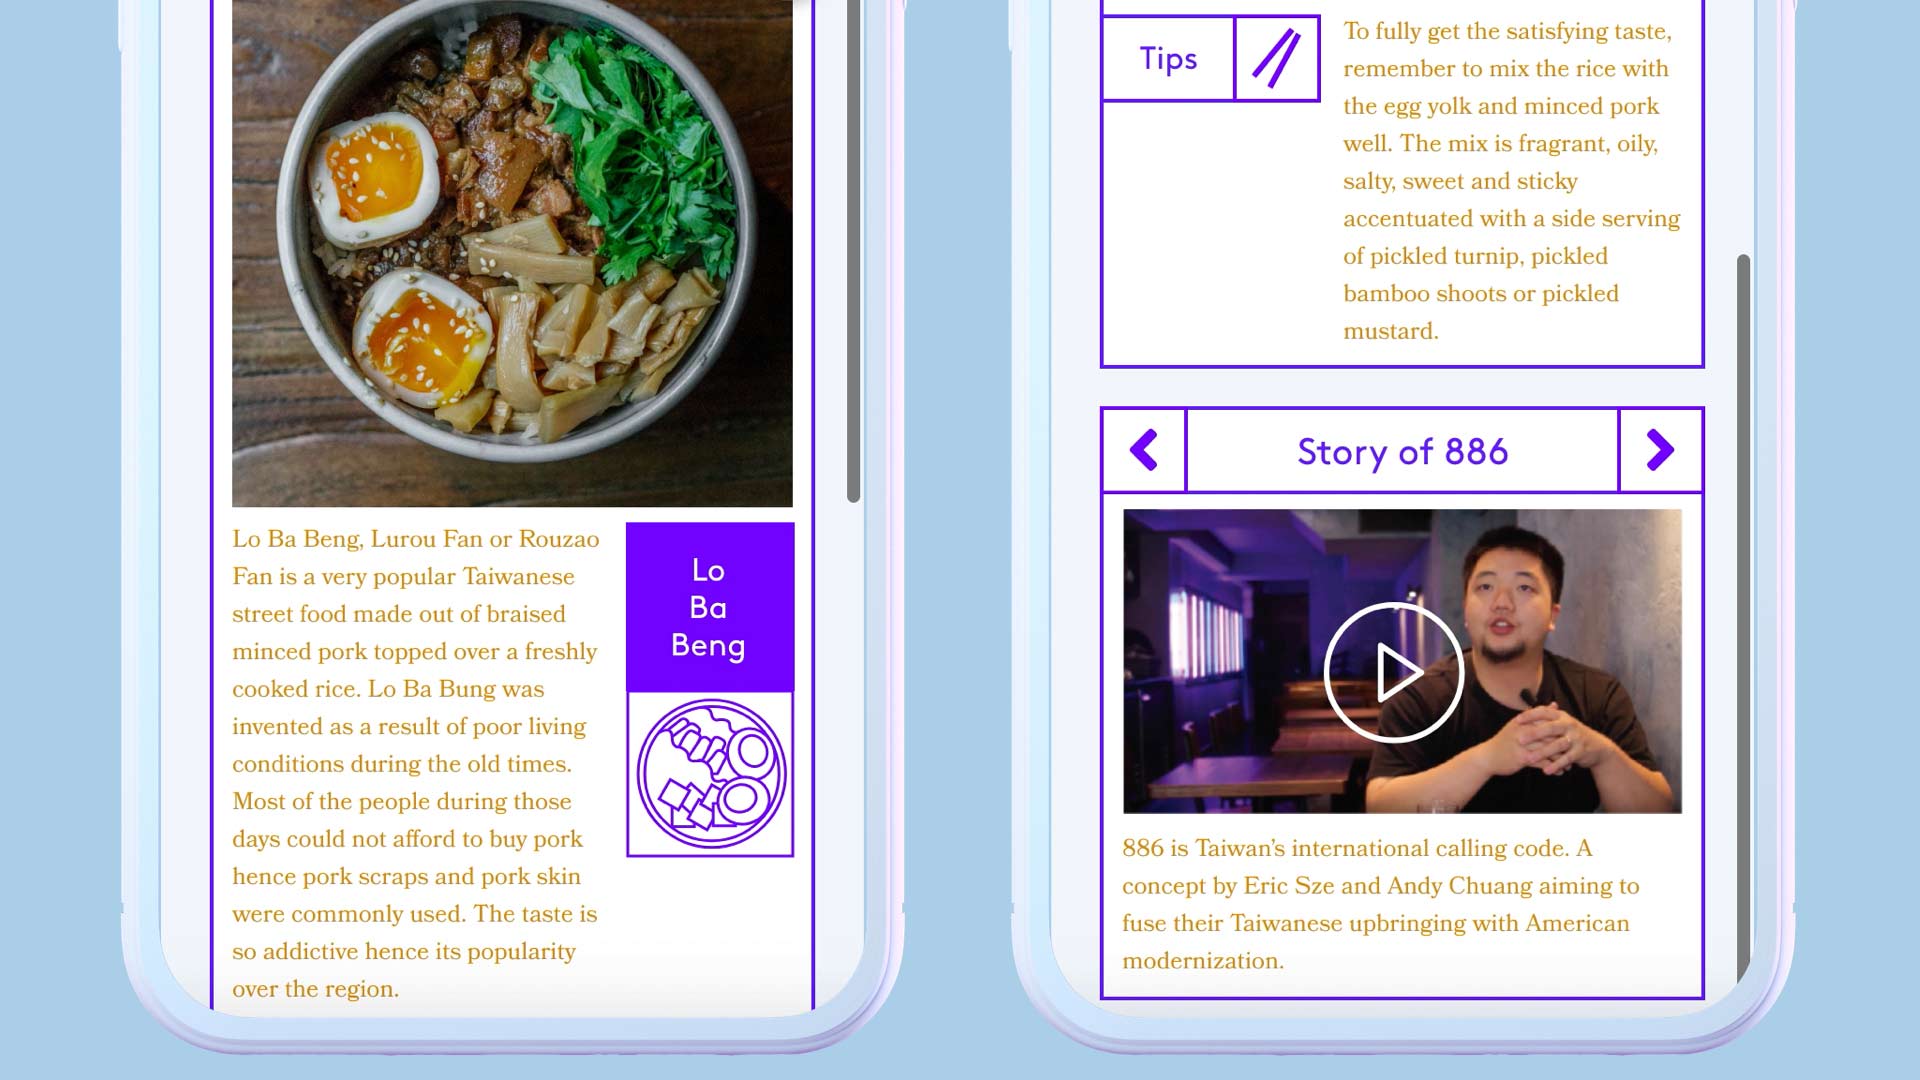 East Side Food Festival mobile application interface